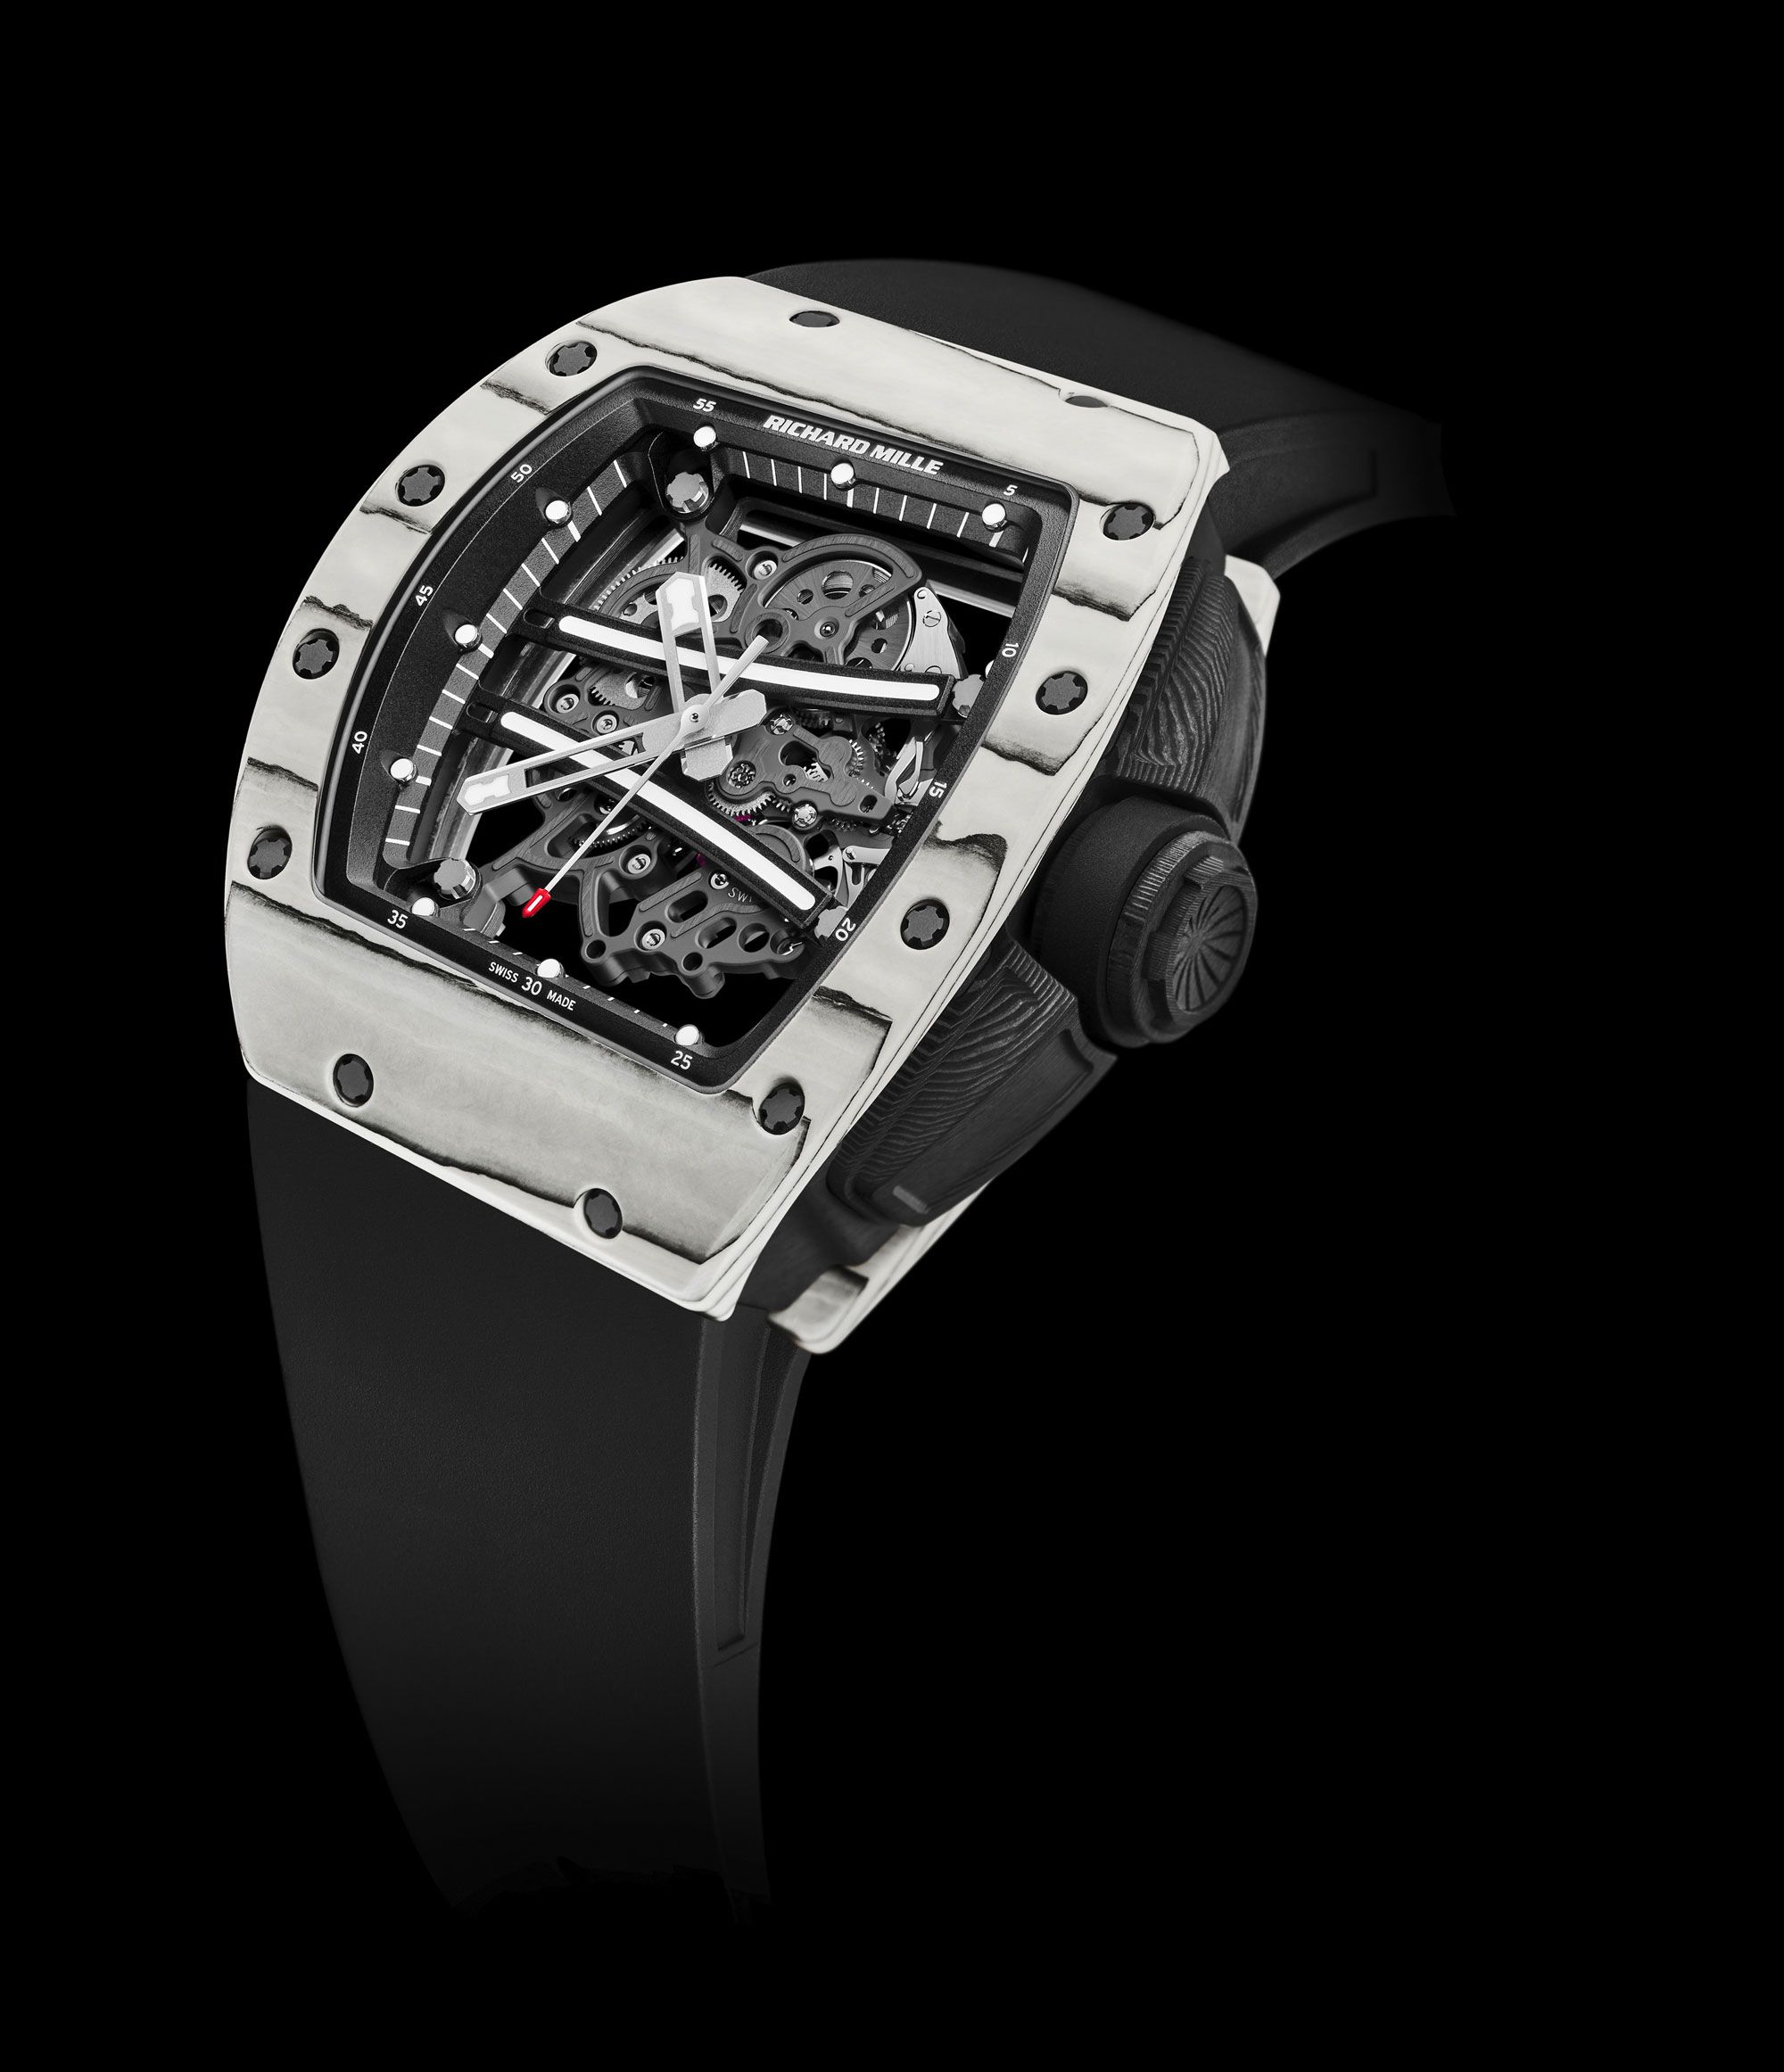 Richard Mille RM030 Titanium Automatic Arabic Skeleton Dial Watch RM 030 SEALEDRichard Mille RM030 Titanium Automatic Red Dial Watch RM030